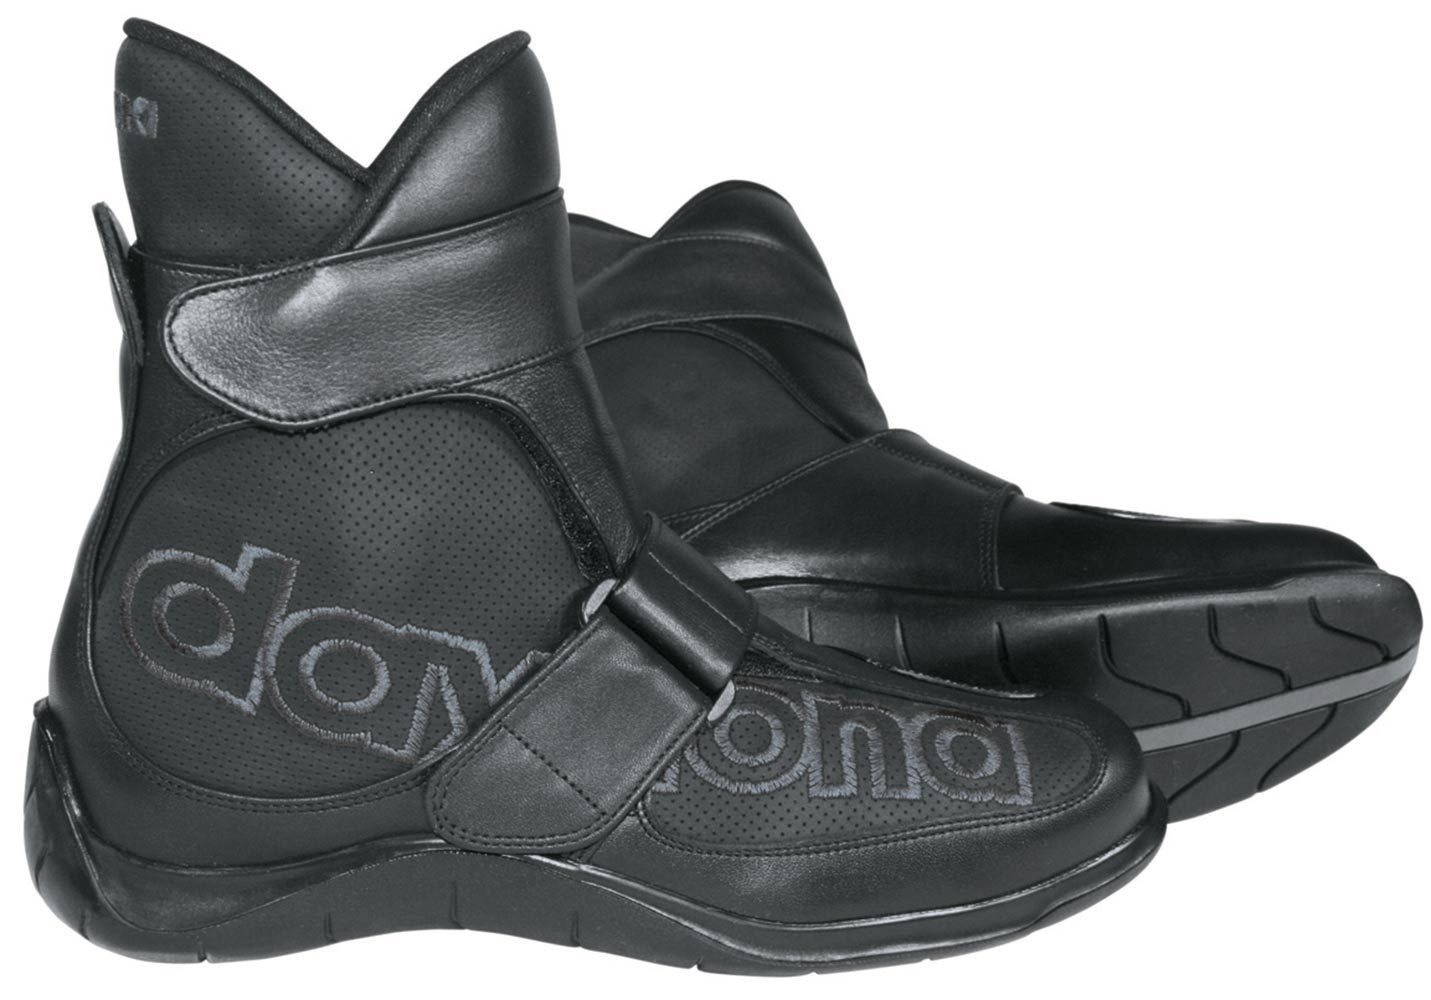 Daytona Shorty Motorradschuhe, schwarz, Größe 34